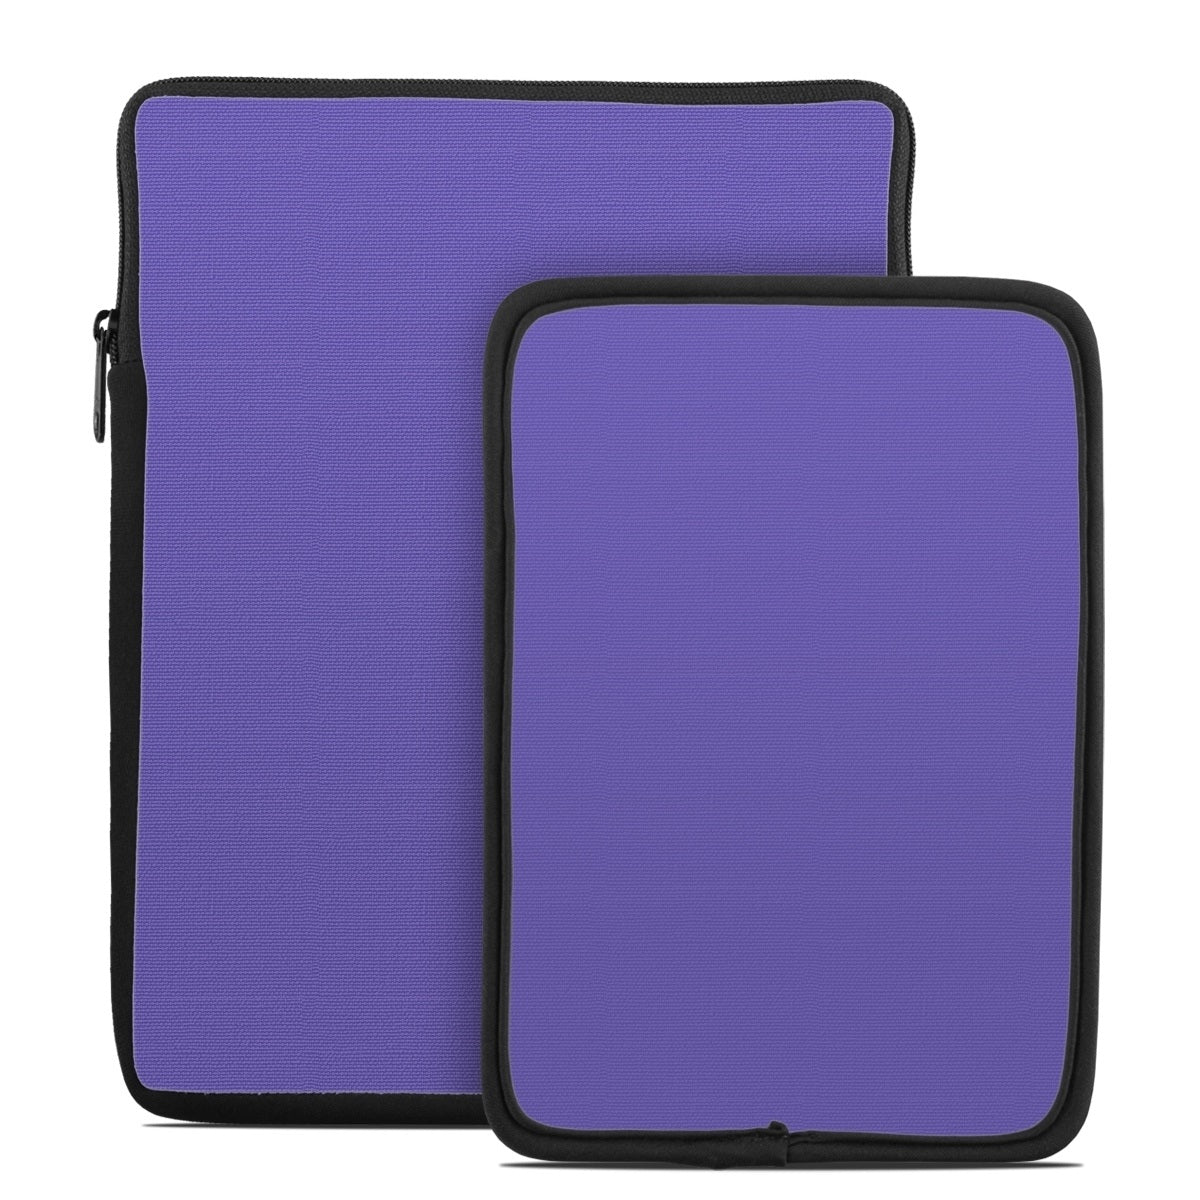 Solid State Purple - Tablet Sleeve